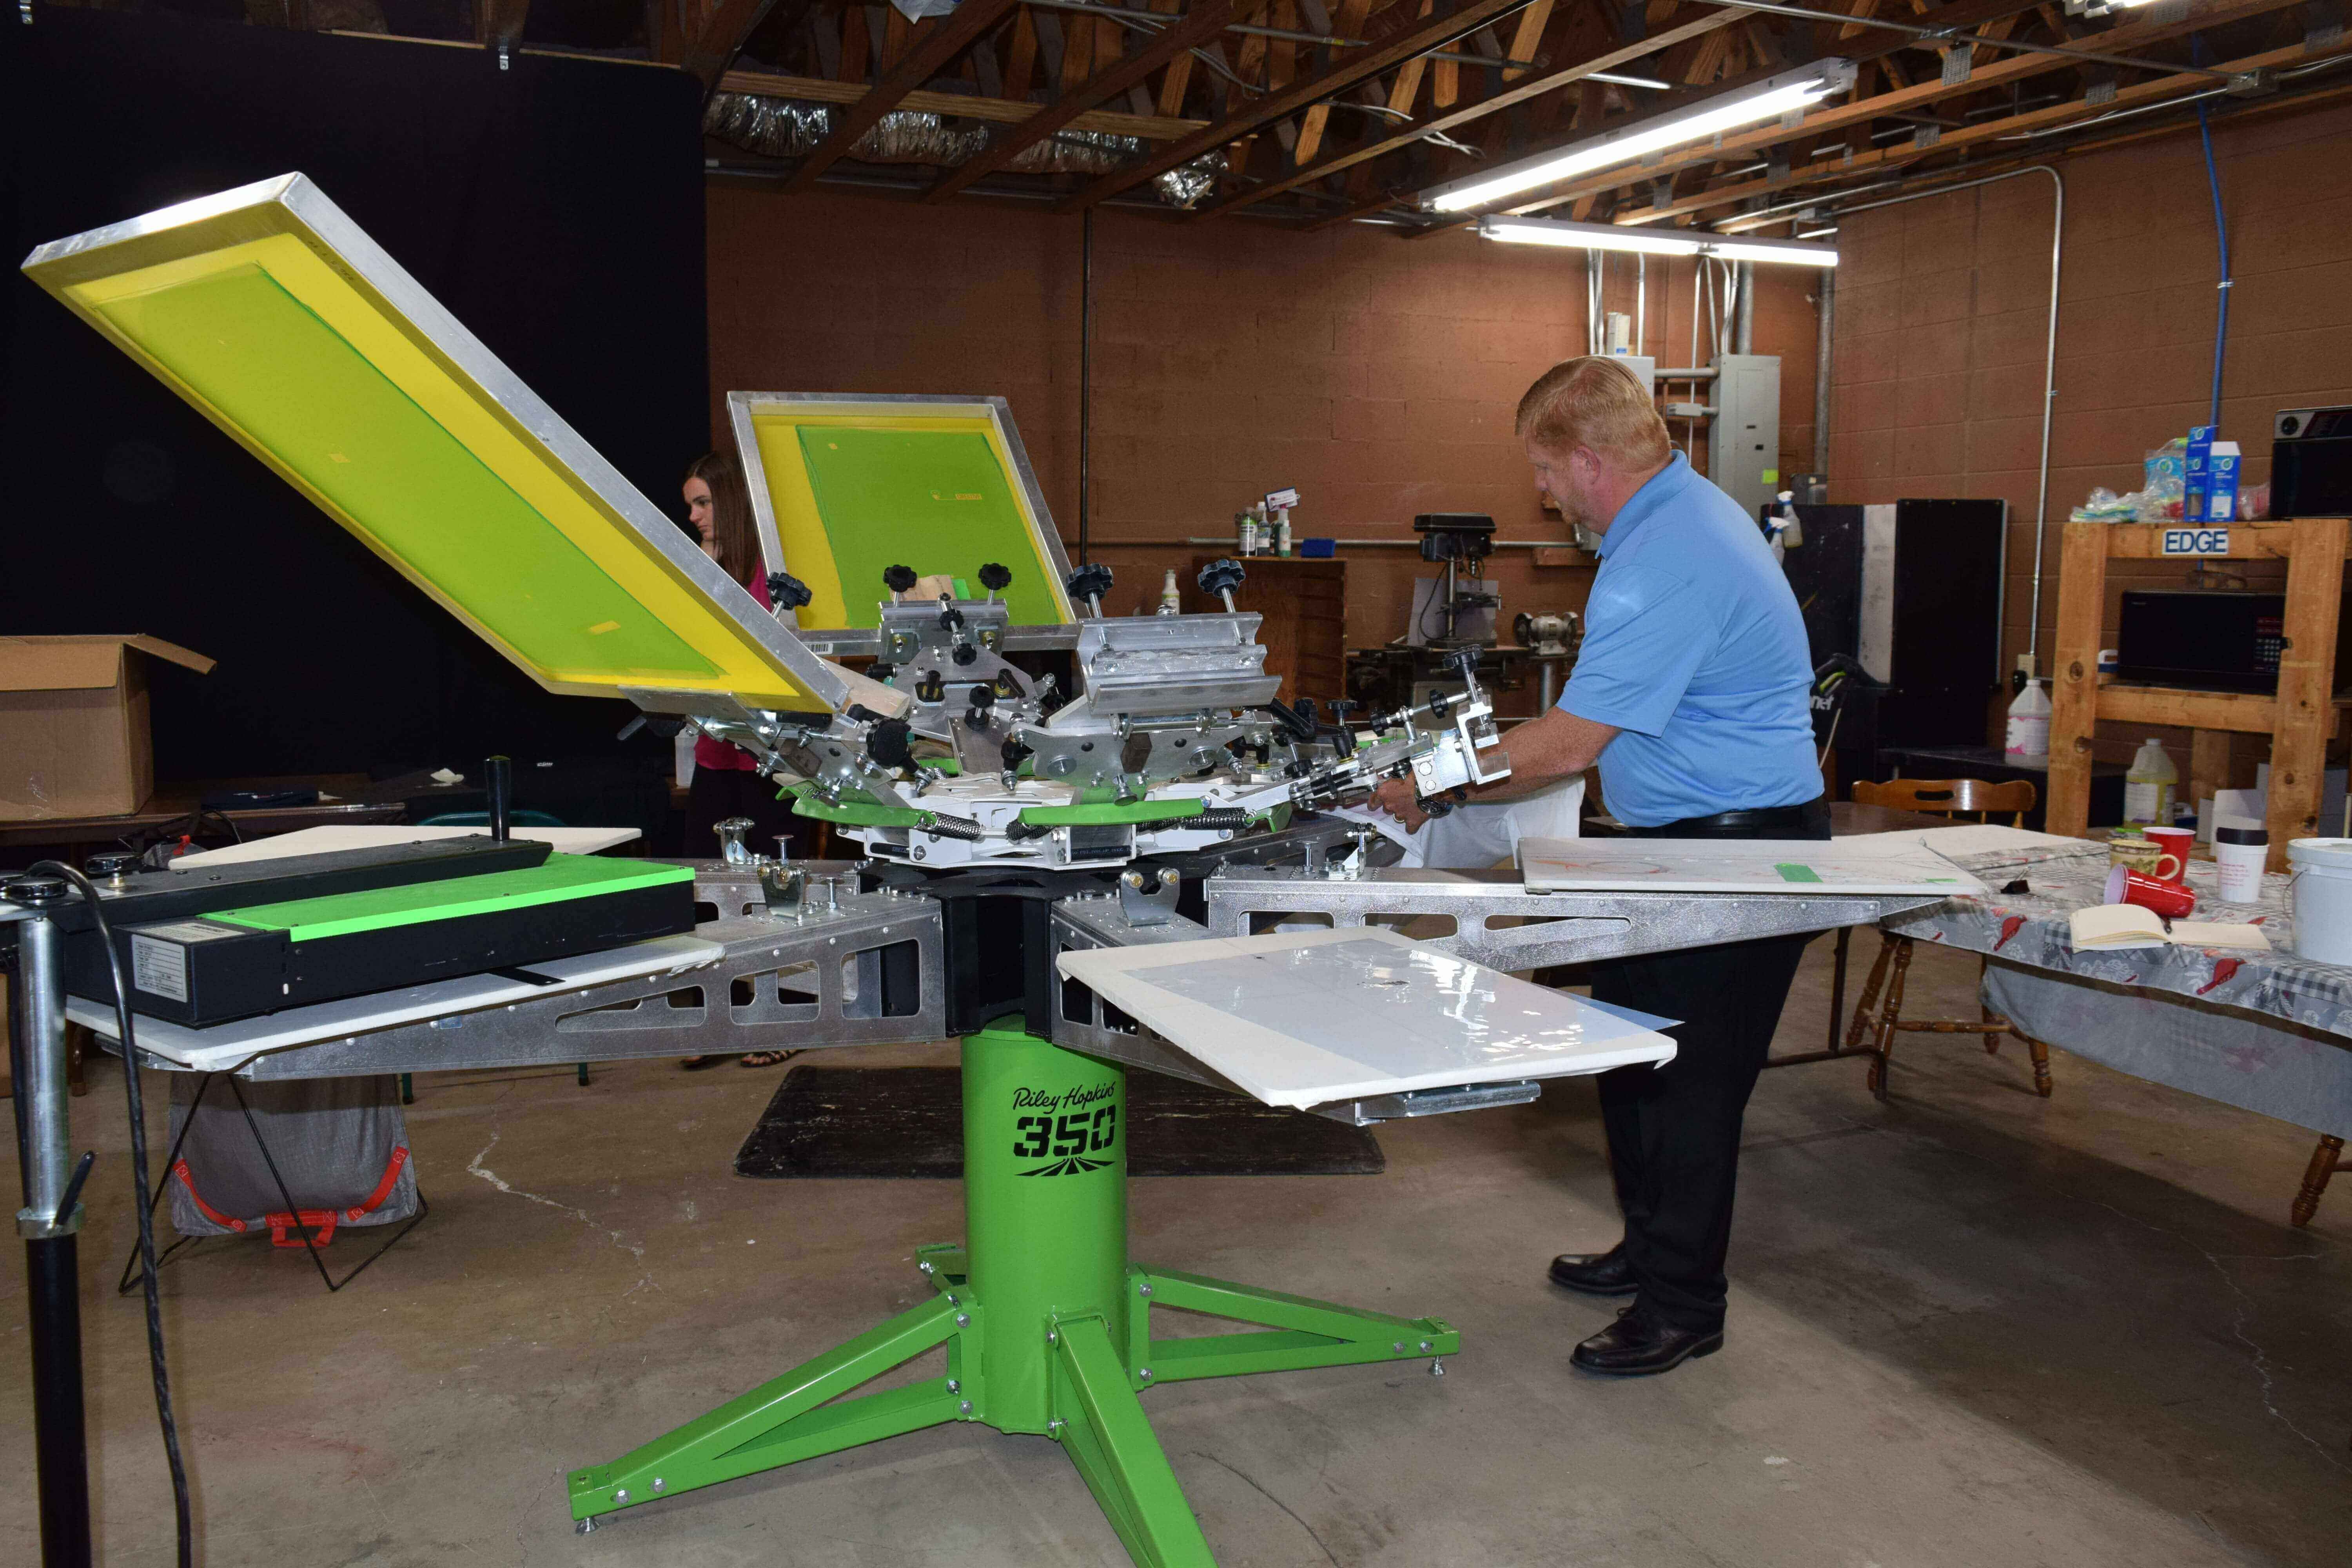 Acme Printing's new screen printing machine for custom tshirts in Morristown, TN.